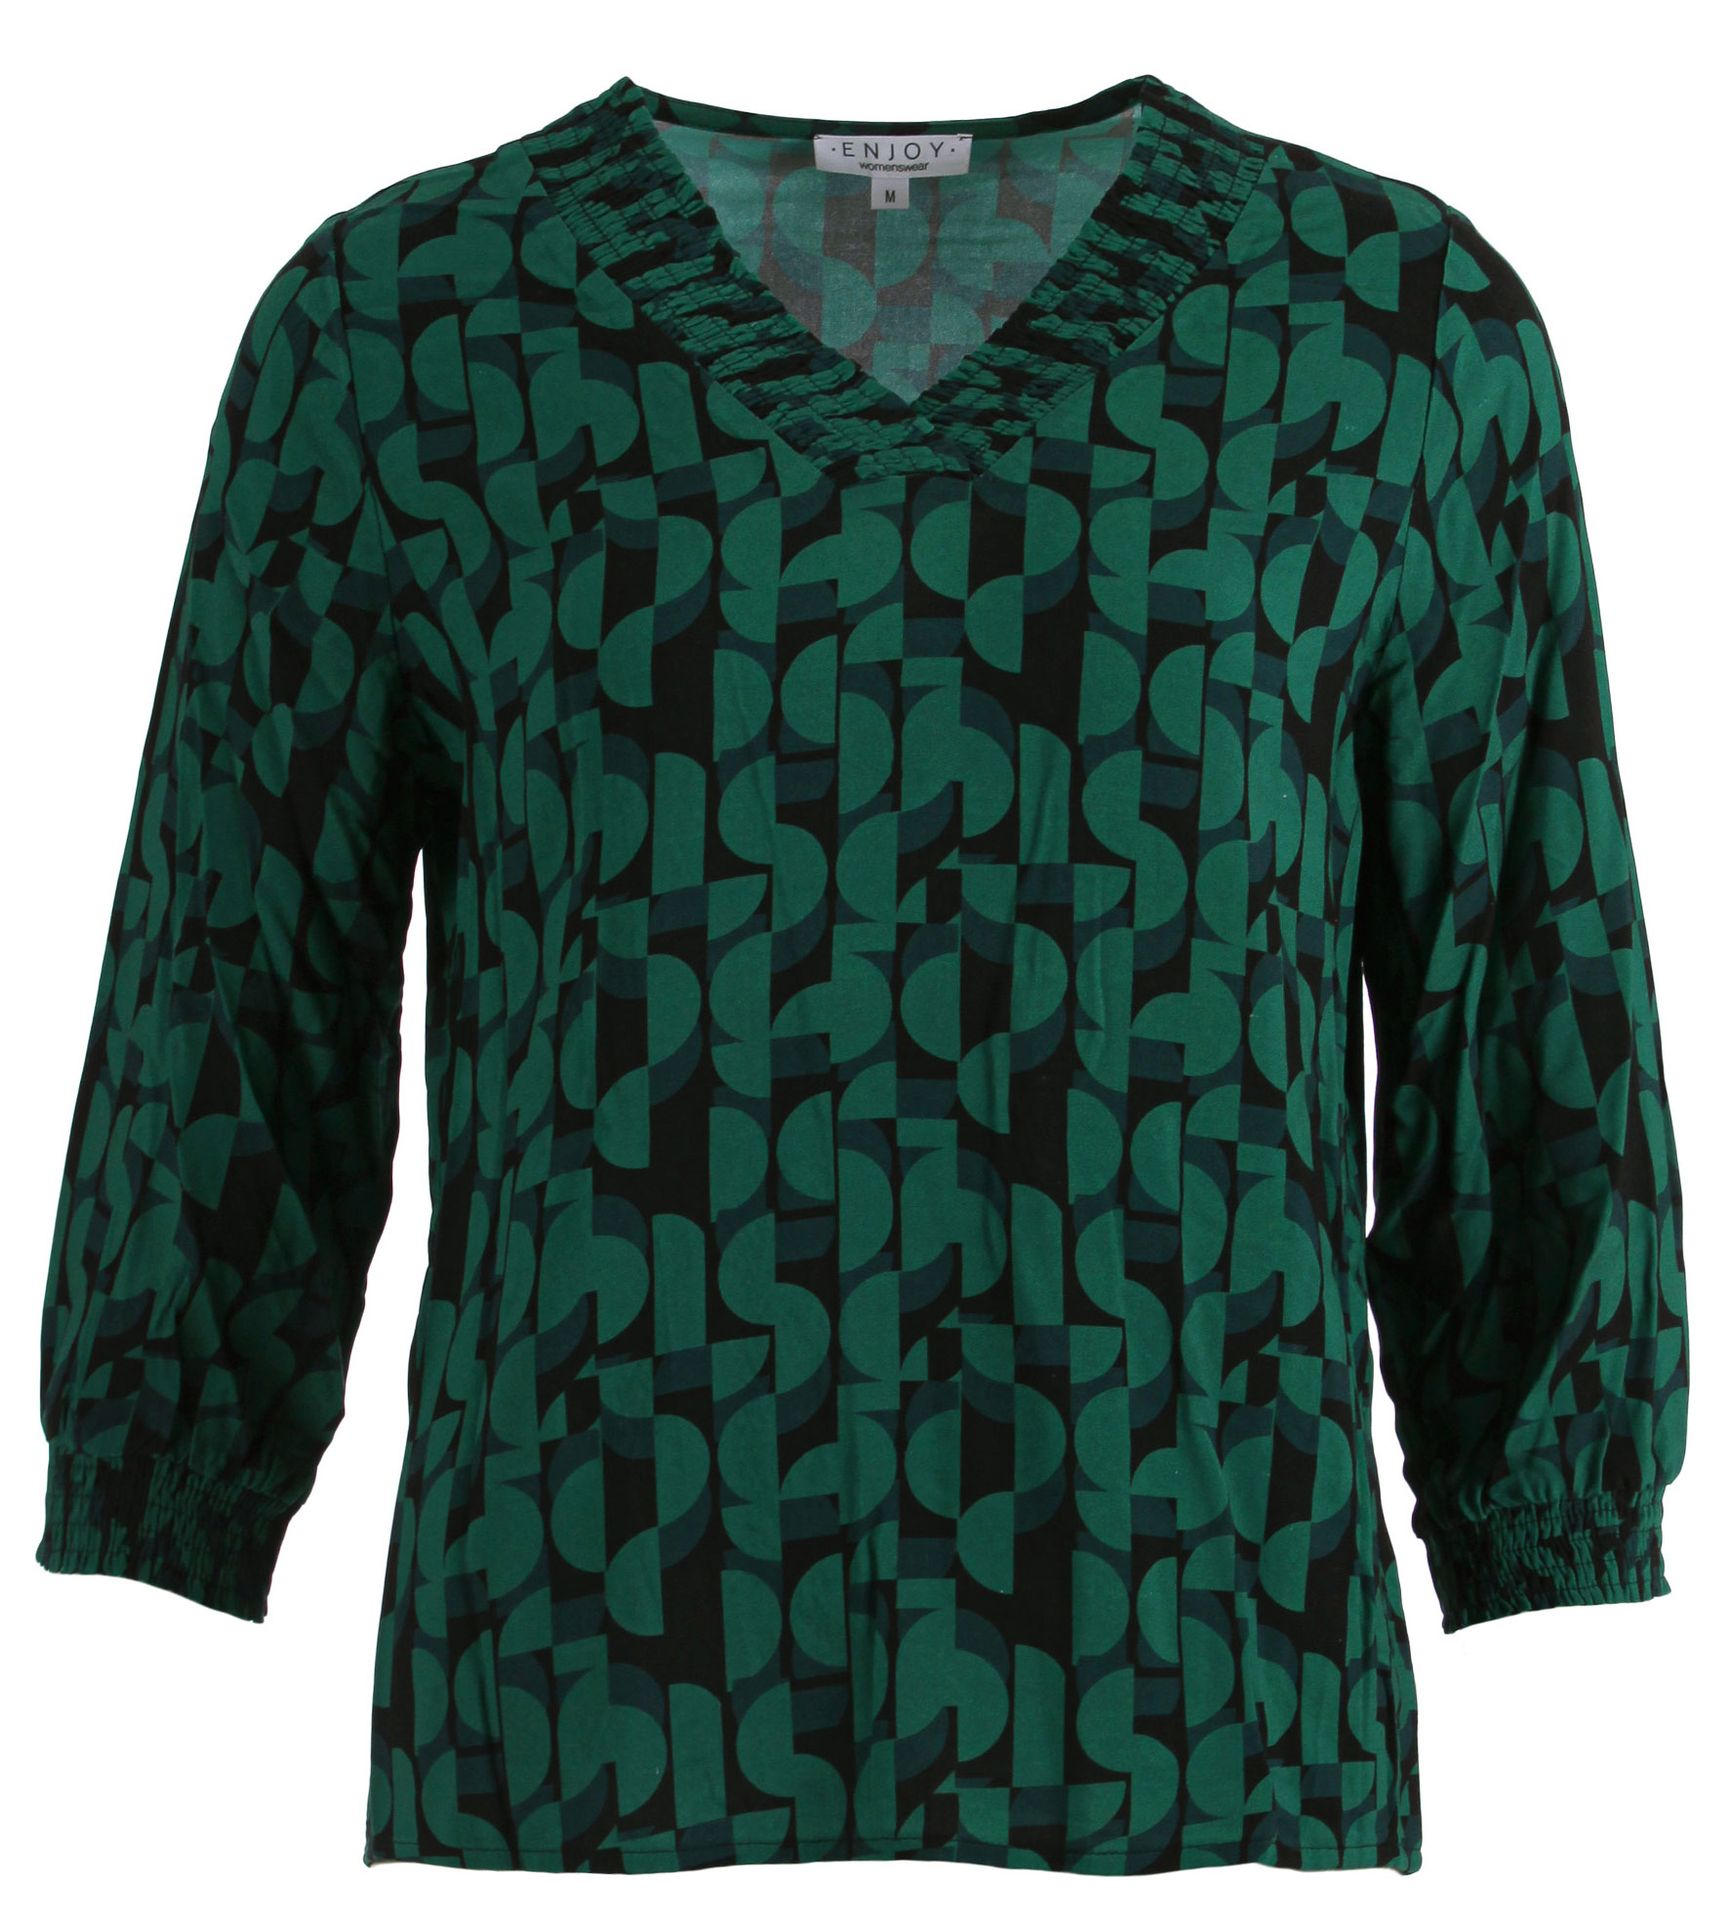 Enjoy Womenswear Enjoy blouse Nova Groen 00076649-6500